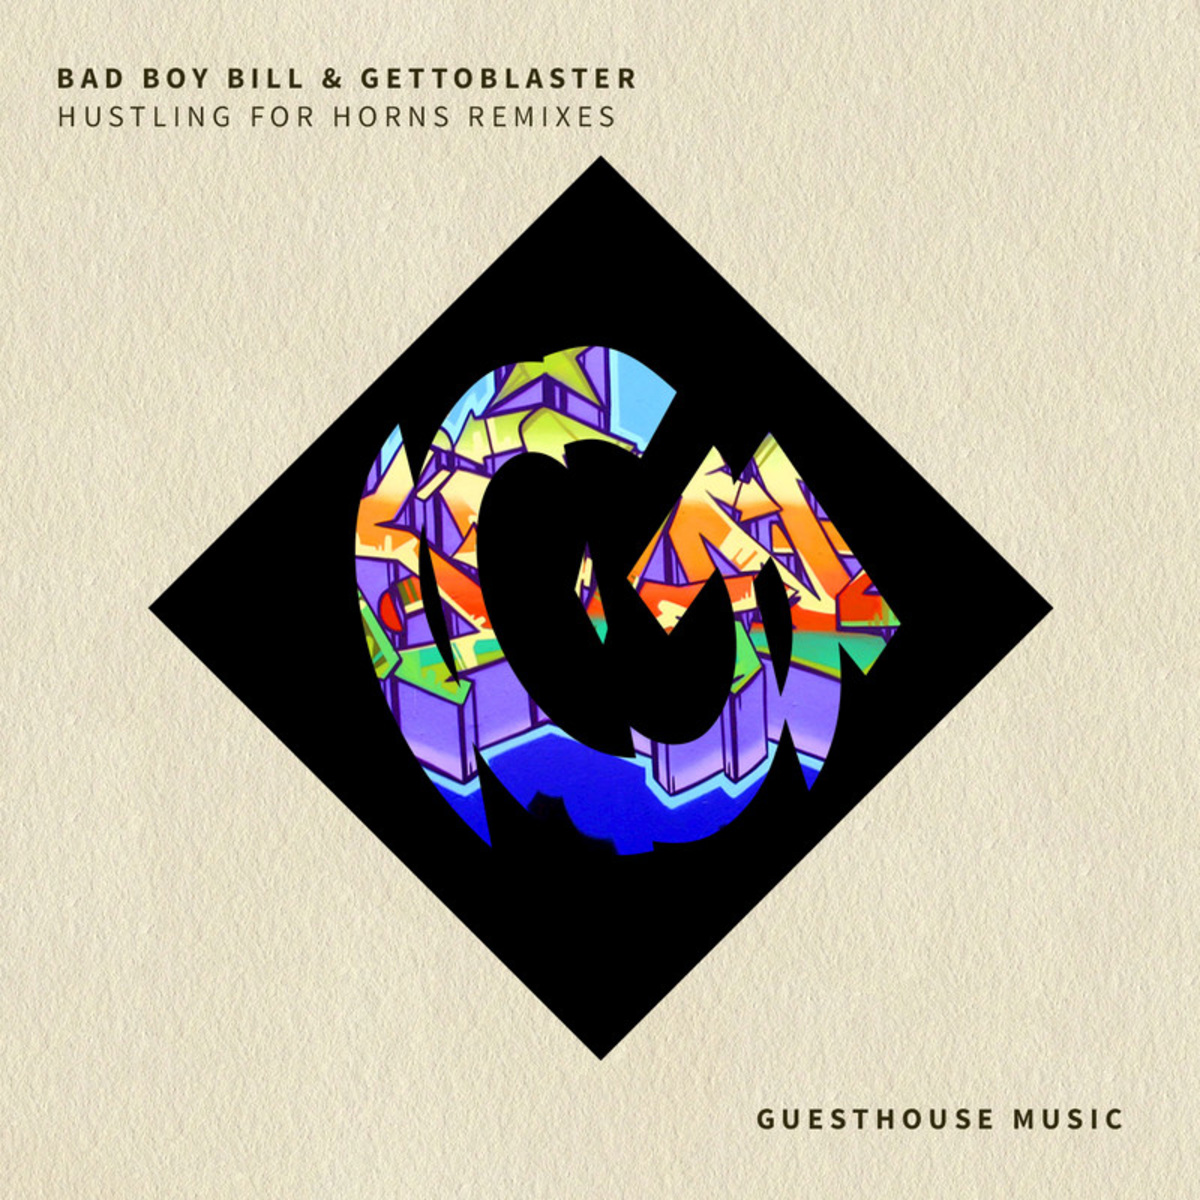 Bad Boy Bill & Gettoblaster - Hustling for Horns (Remixes) / Guesthouse Music